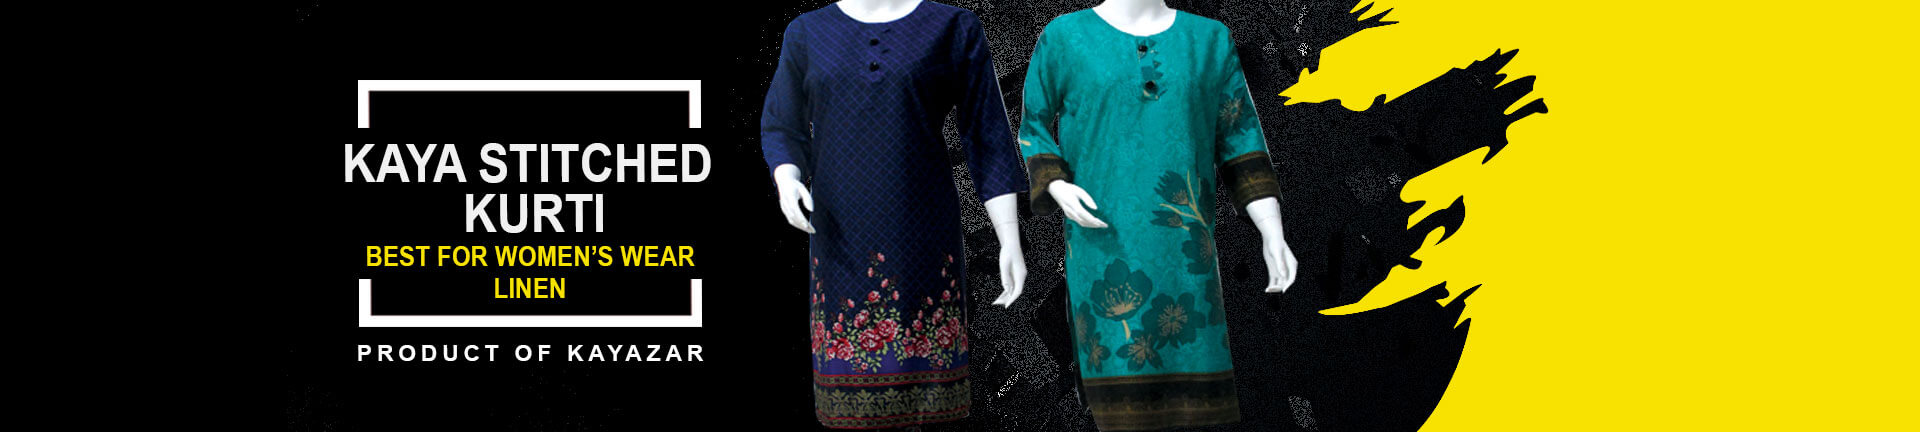 Buy Stitched Kurtis Kaya Linen Collection Online in Pakistan - Kayazar